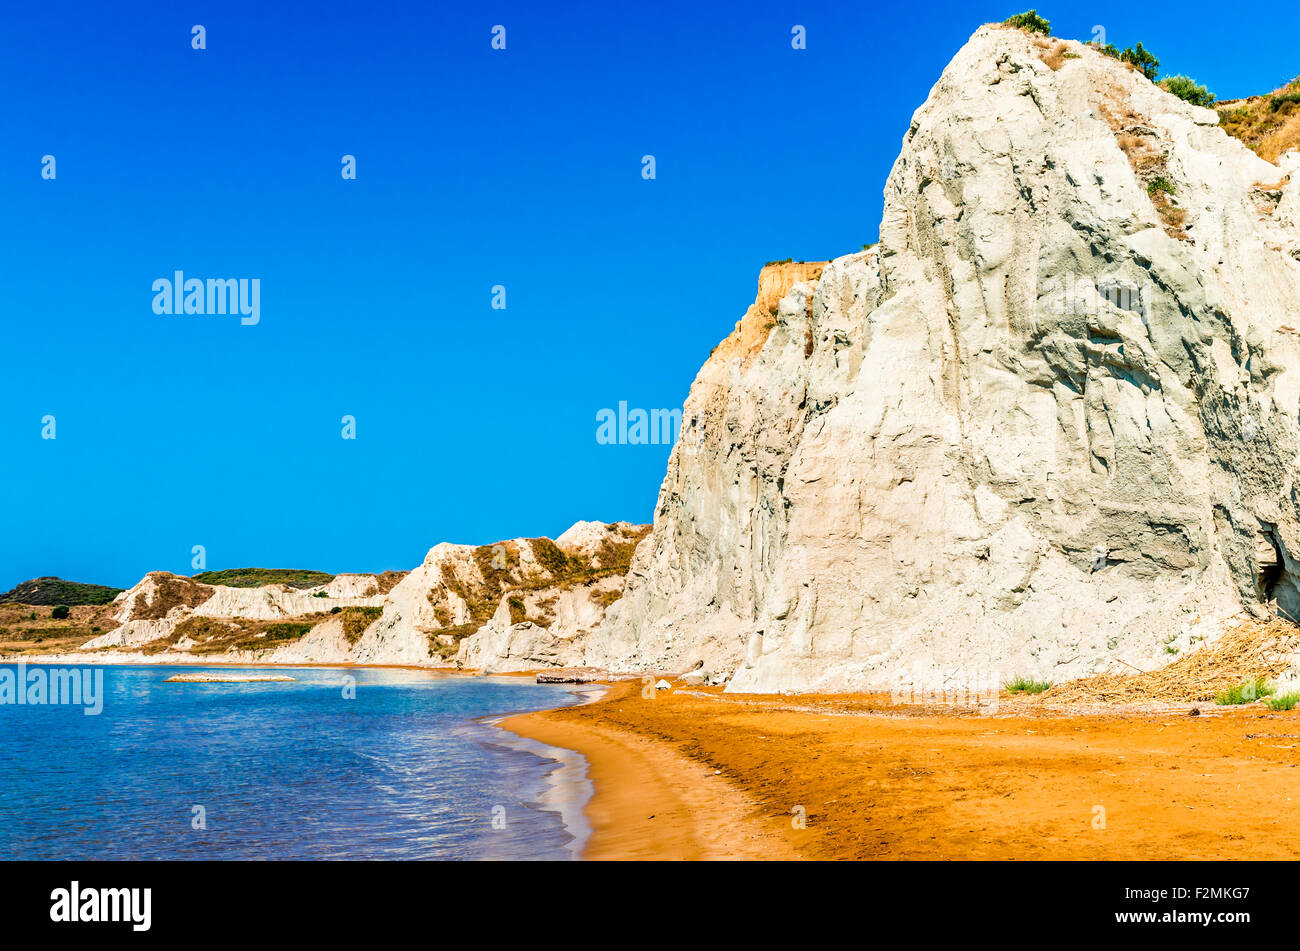 Xi Beach, Kefalonia Island, Greece. Beautiful view of Xi Beach, a beach with red sand in Kefalonia, Ionian Sea. Stock Photo